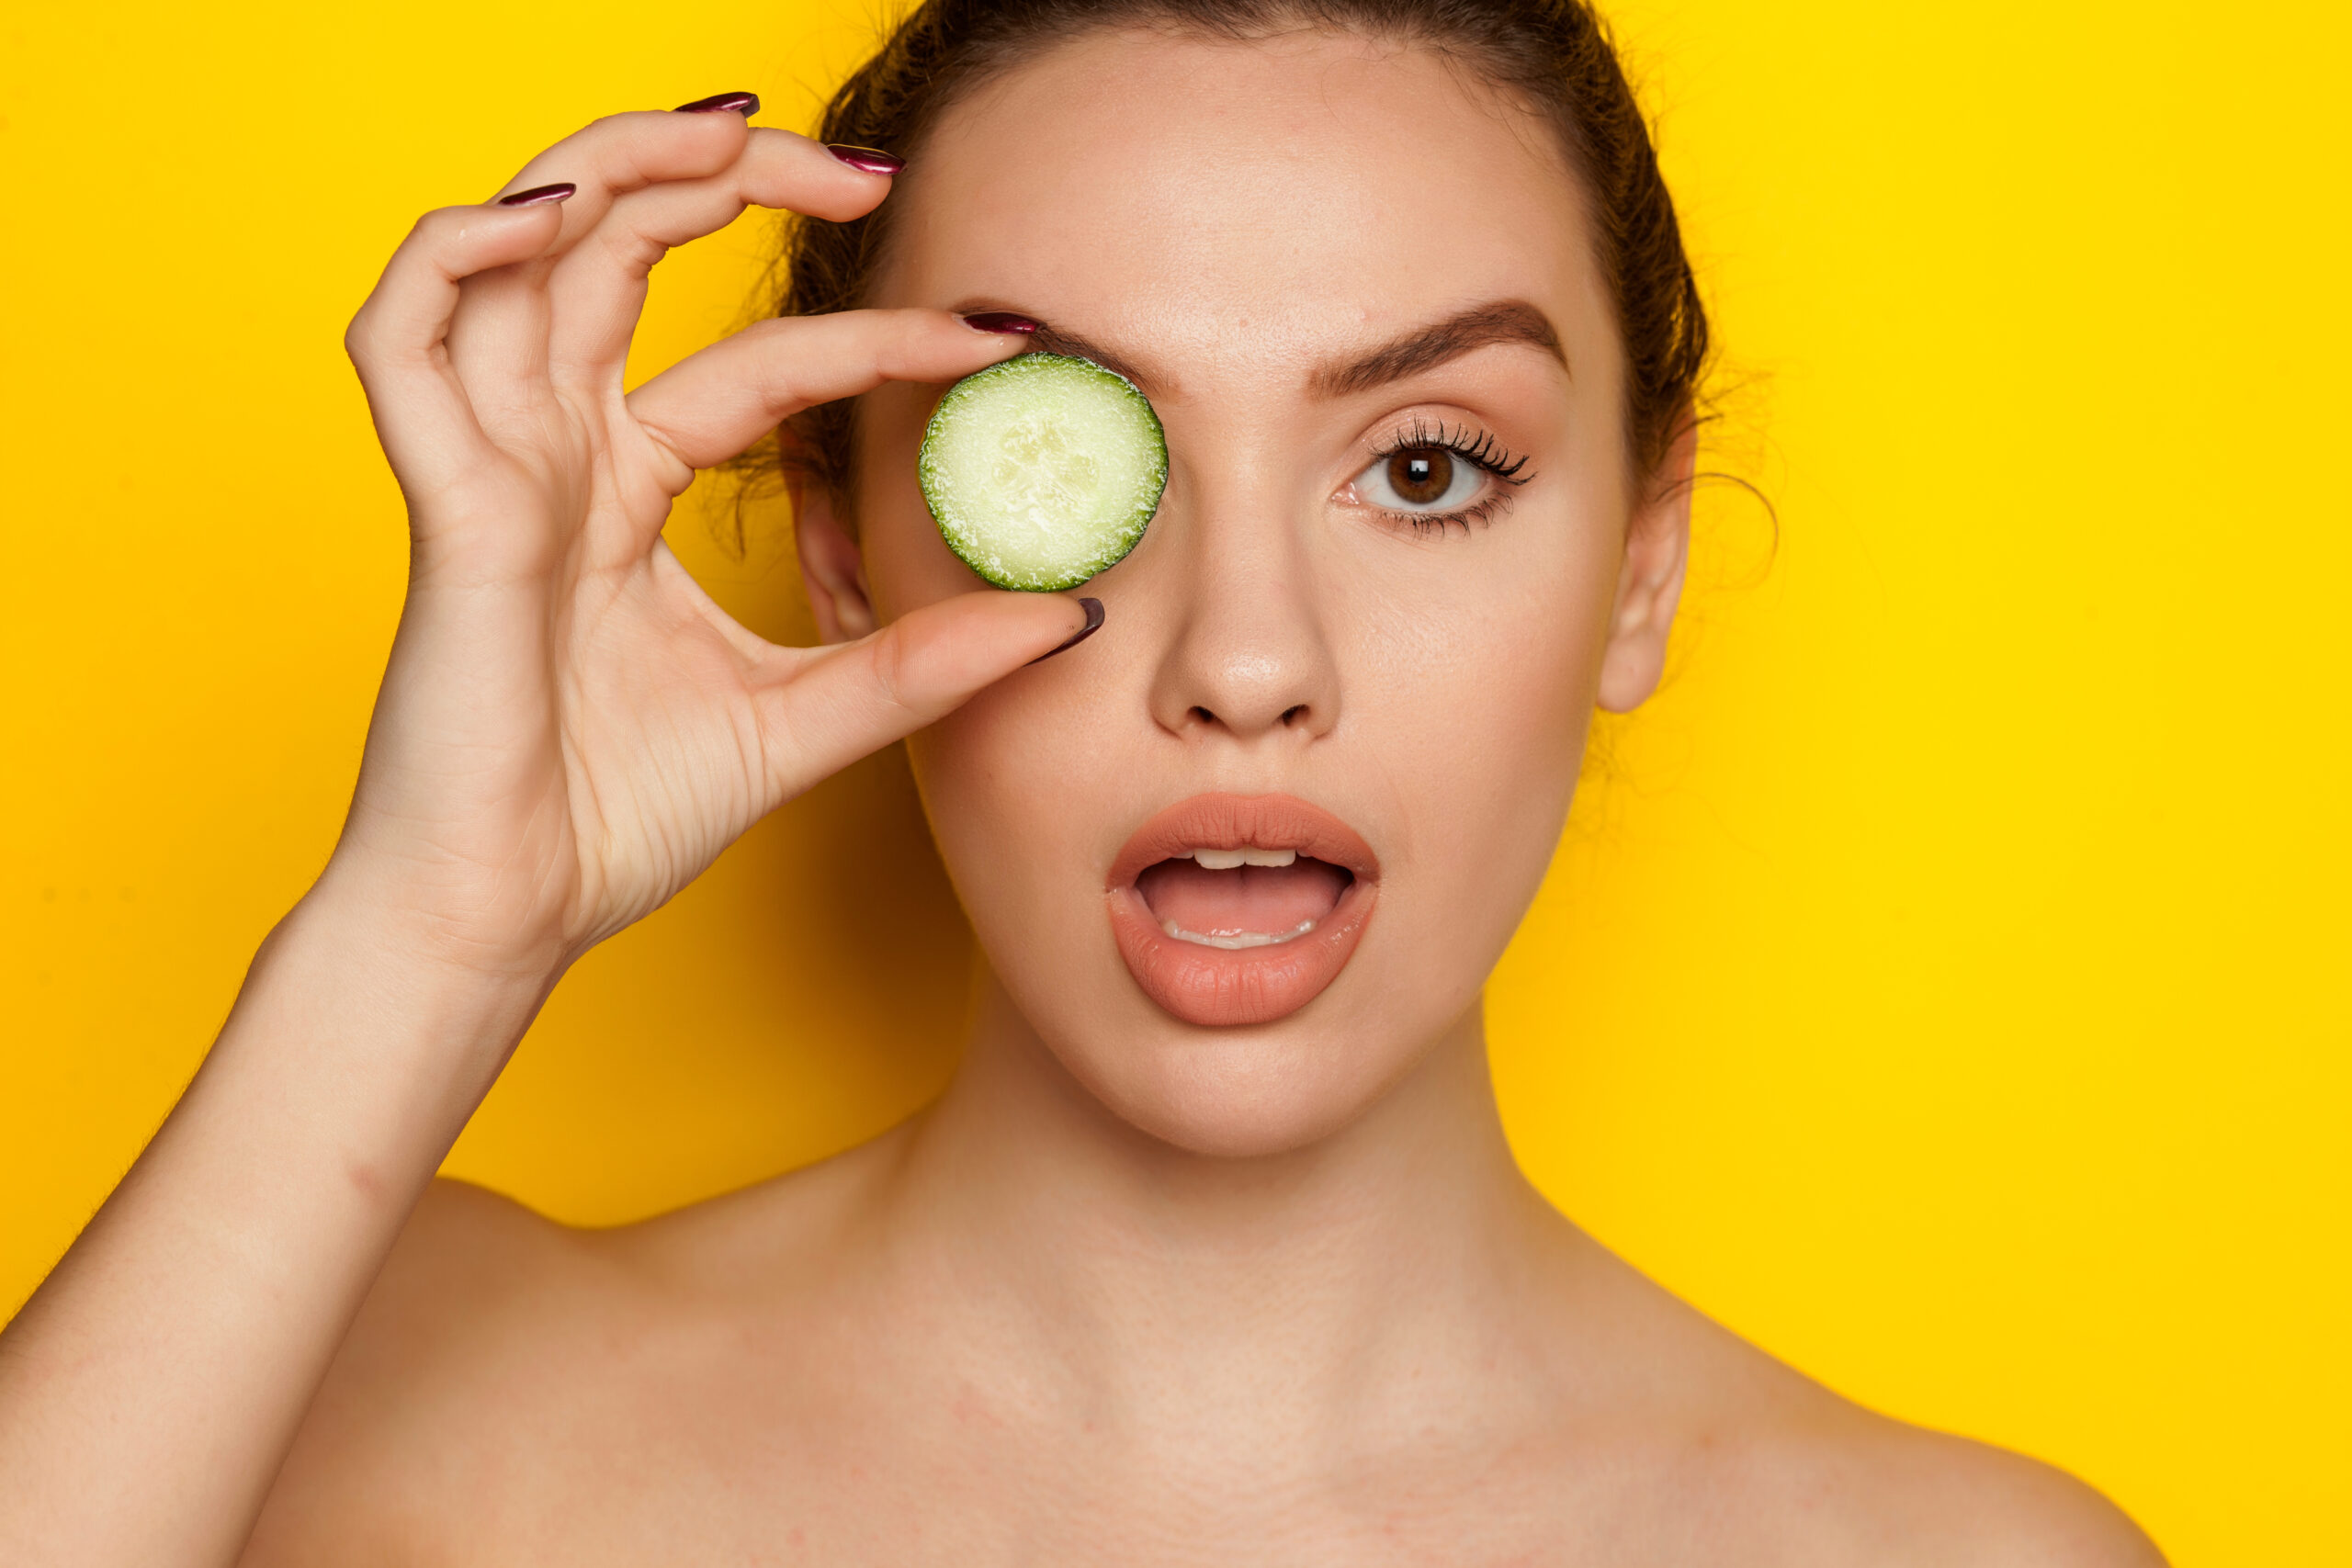 Vitamin K cucumber on eye for skin care purpose